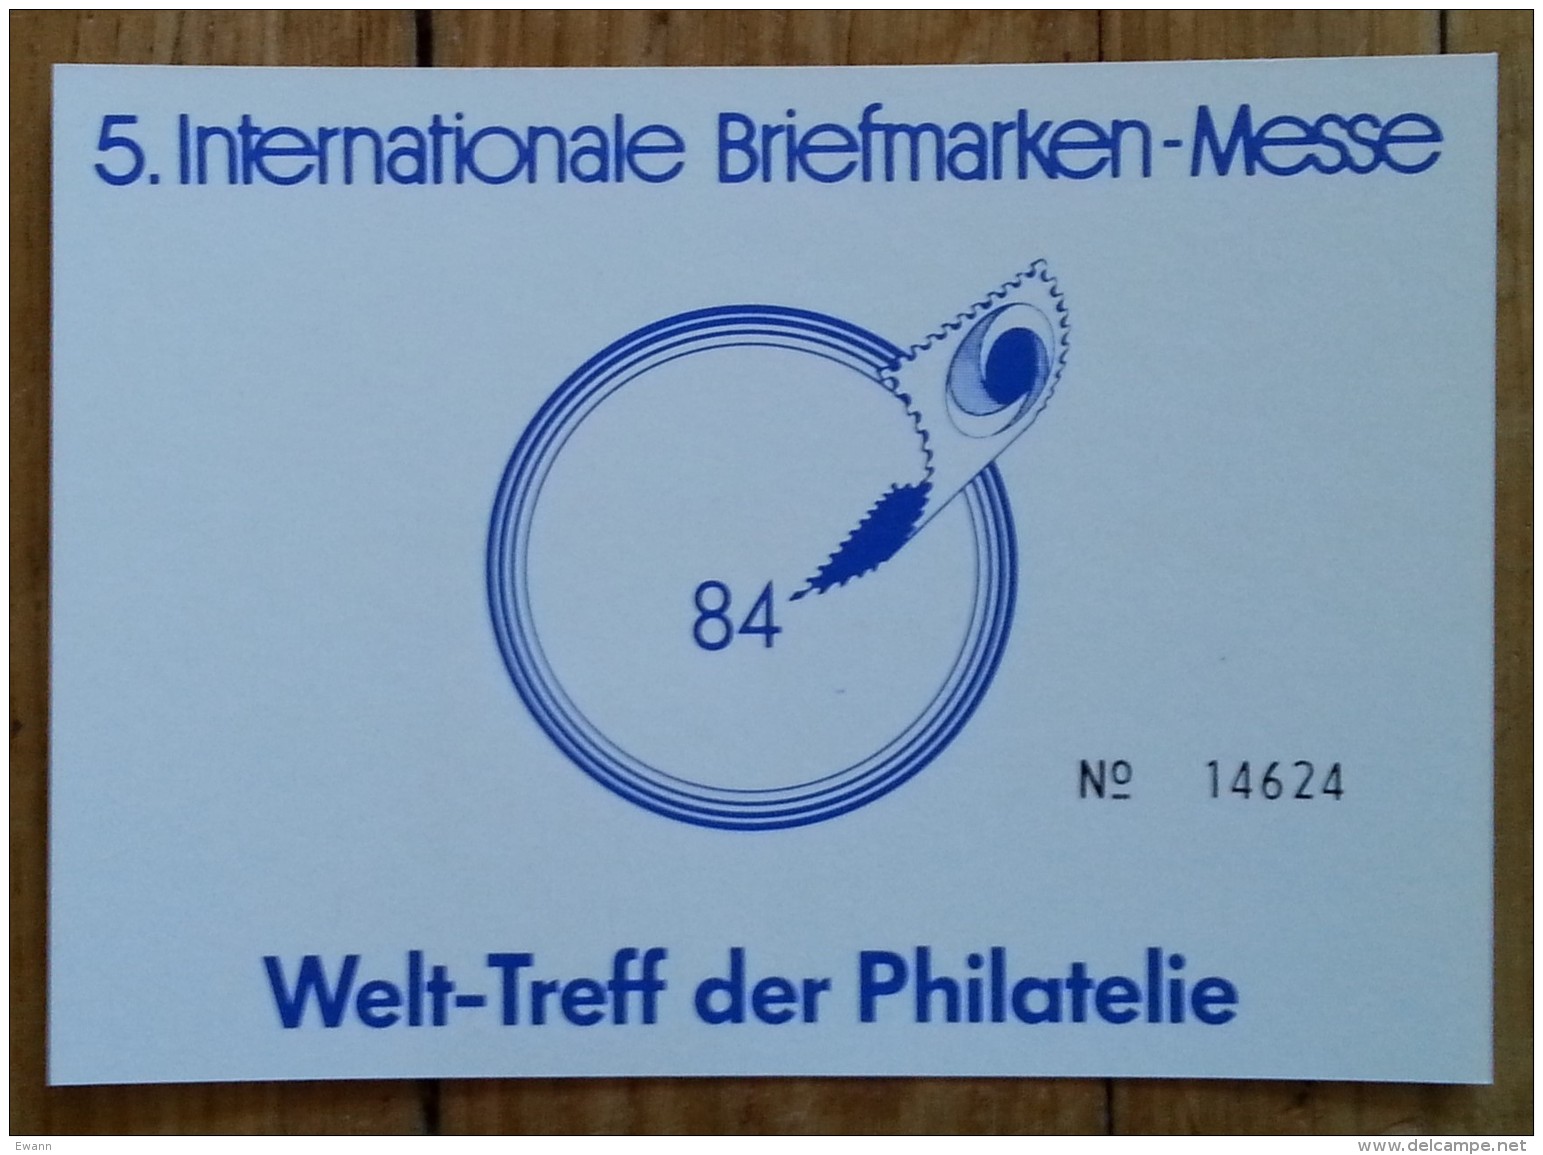 ISLANDE - Timbre De Distributeur - International Briefmarken Messe - ESSEN - 1984 - Vignettes D'affranchissement (Frama)